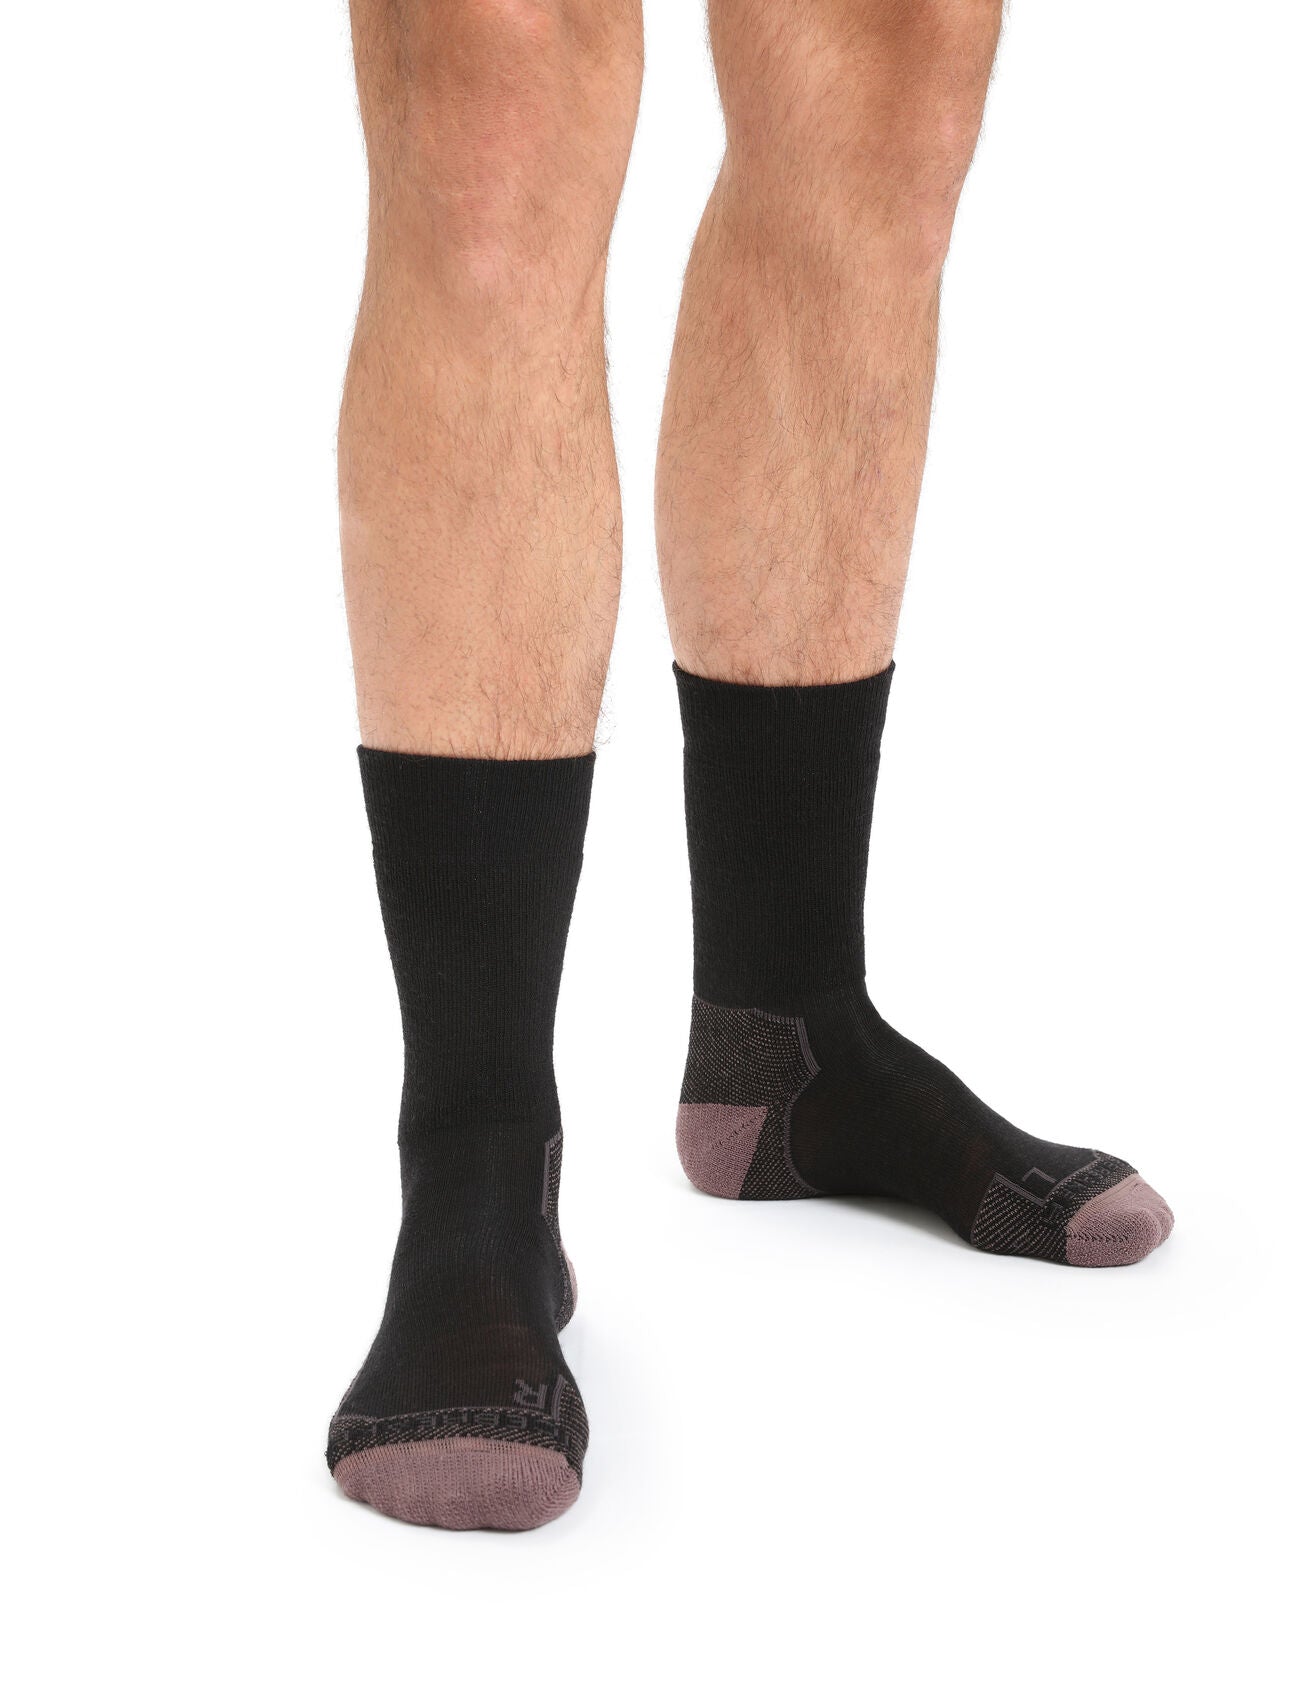 Icebreaker Merino Hike+ Medium Crew Socks (Men's) - Black/Mink - Find Your Feet Australia Hobart Launceston Tasmania